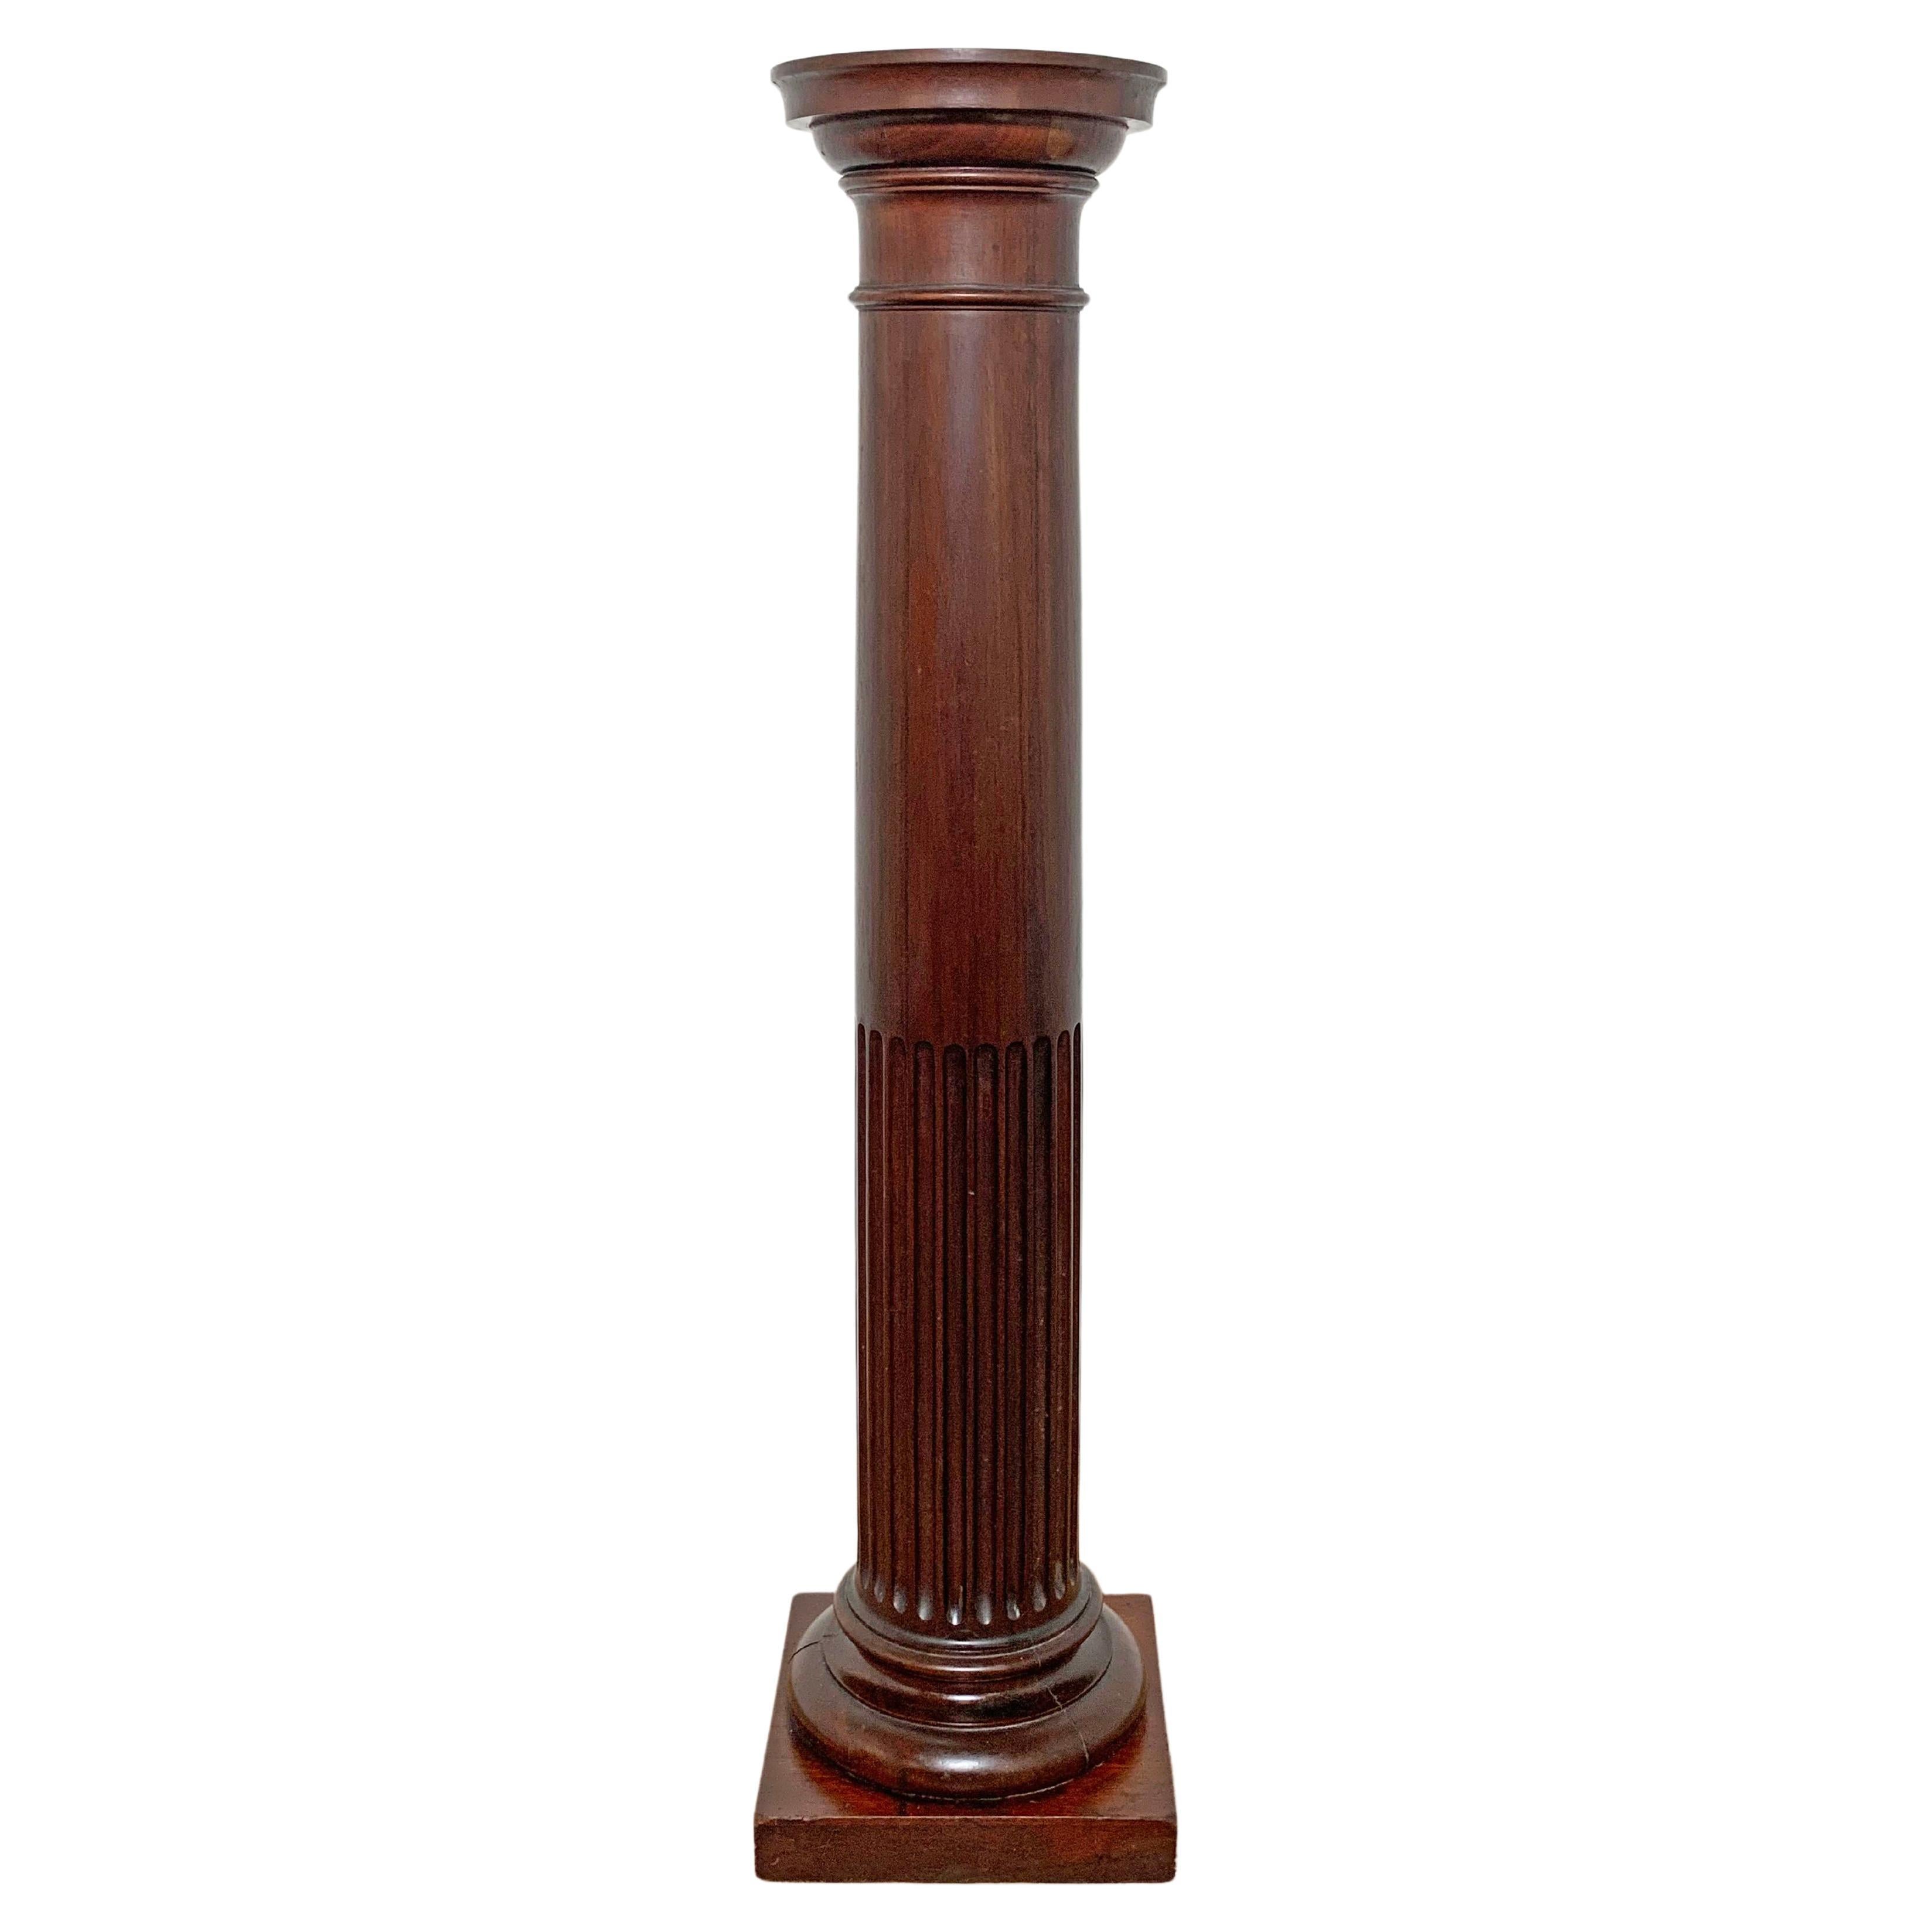 Antique Federal Era Solid Mahogany Pedestal or Fern Stand